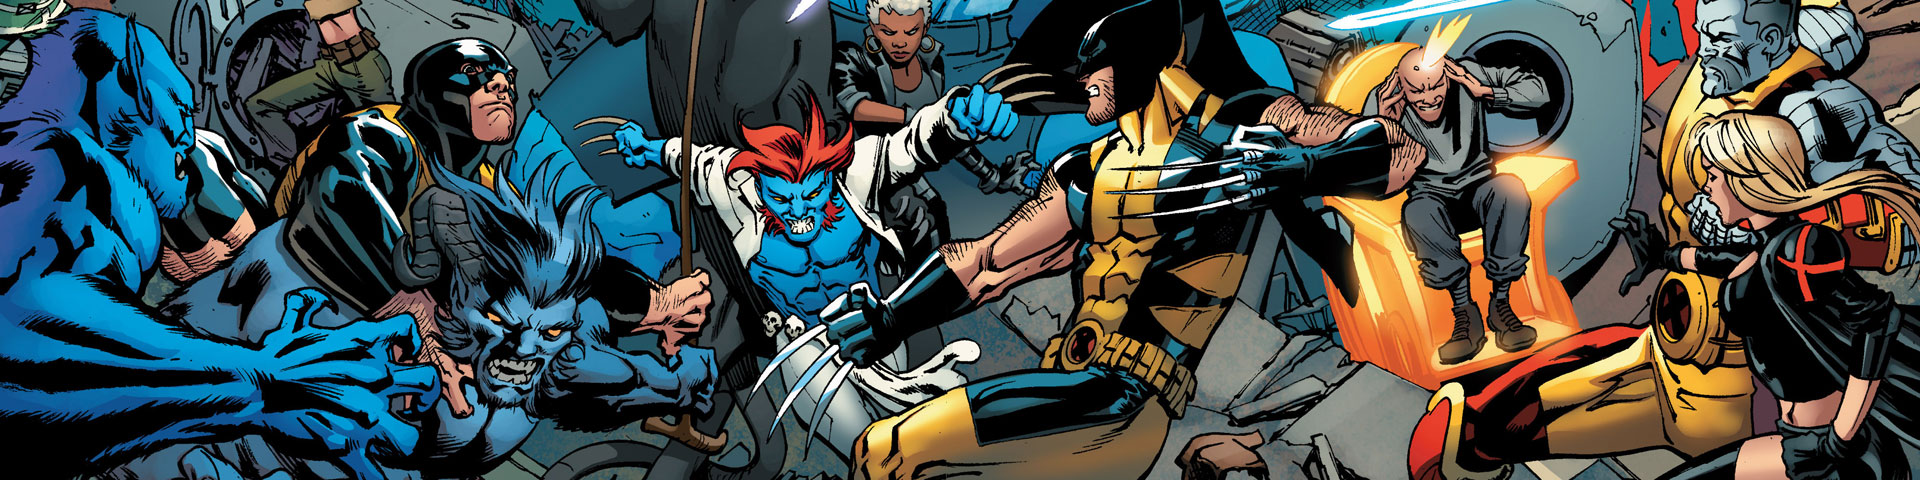 A massive melee of X-Men superheroes.